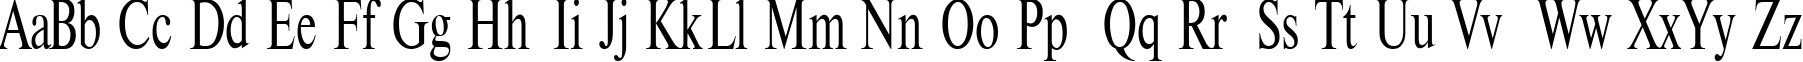 Пример написания английского алфавита шрифтом TimesET65n